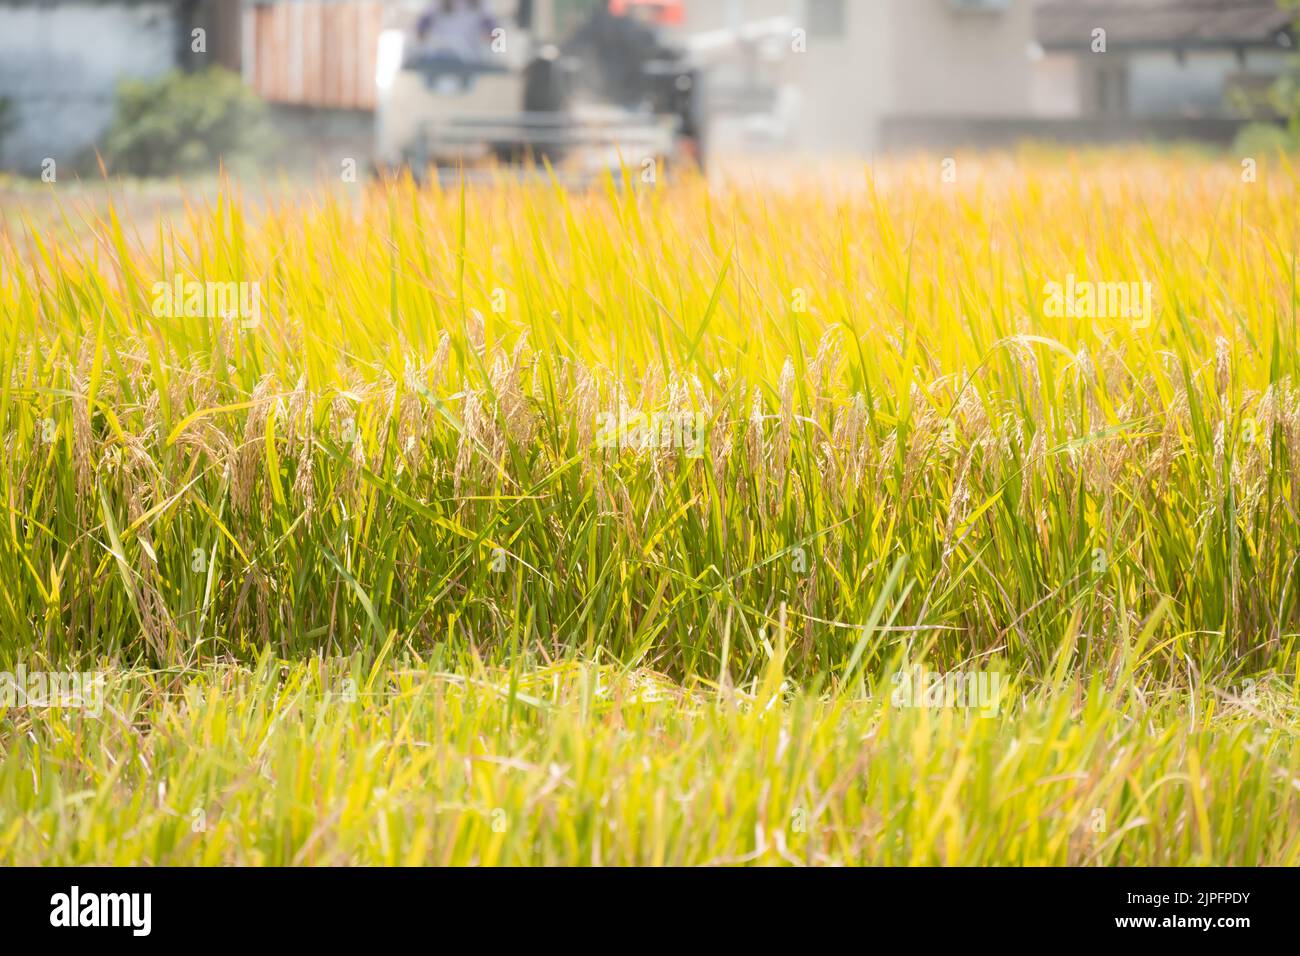 harvesting paddies by a harvester machine Stock Photo